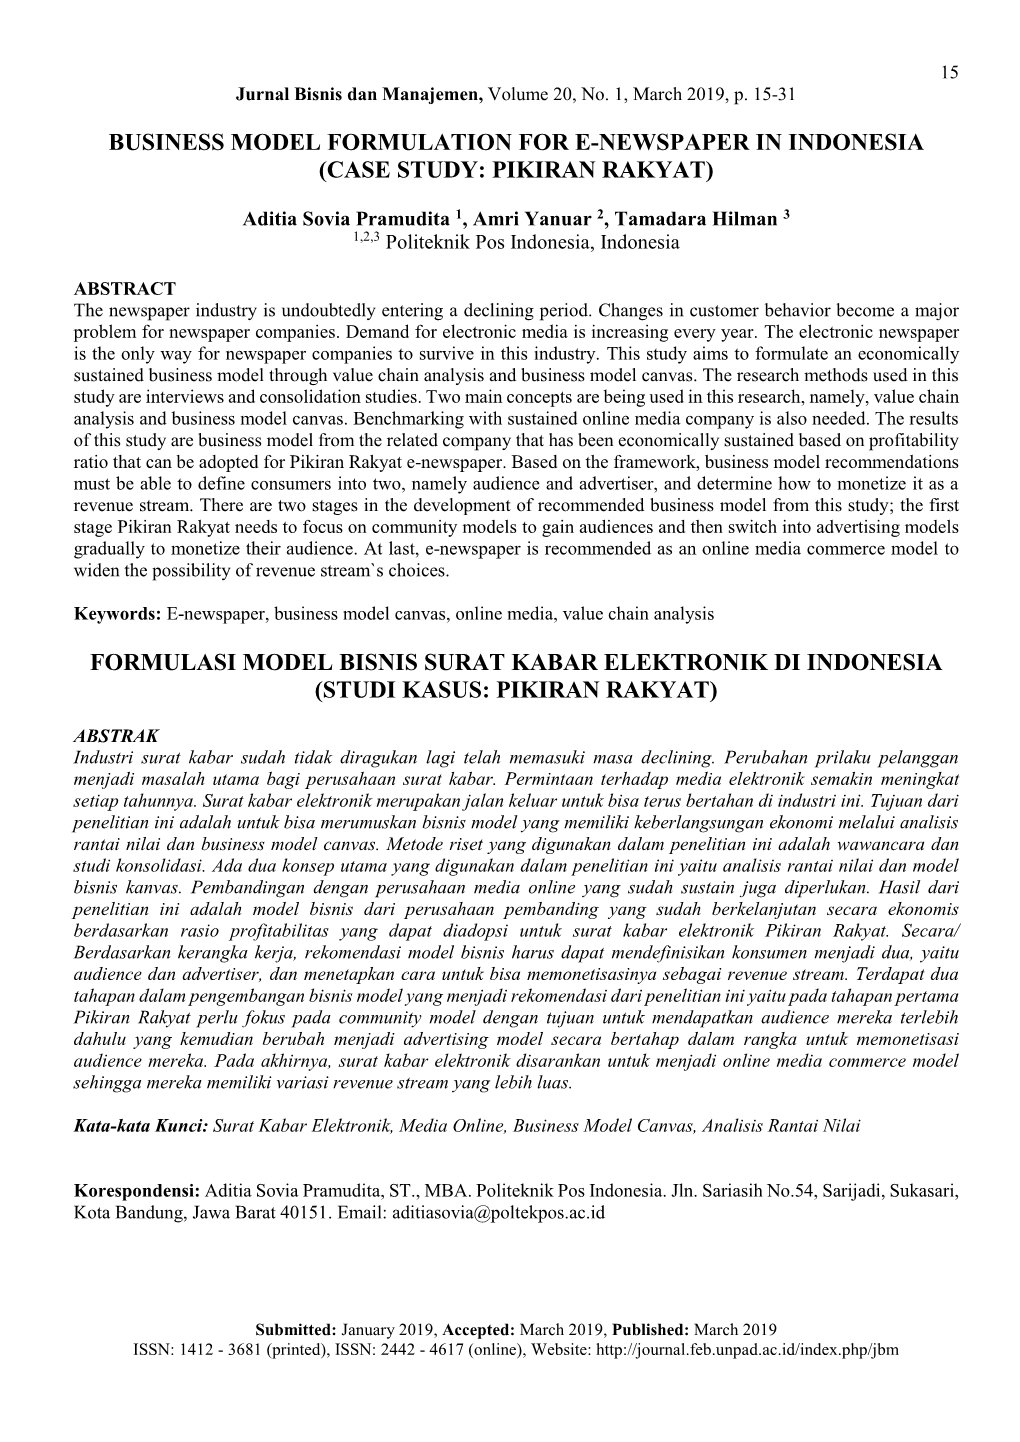 Business Model Formulation for E-Newspaper in Indonesia (Case Study: Pikiran Rakyat) Formulasi Model Bisnis Surat Kabar Elektro